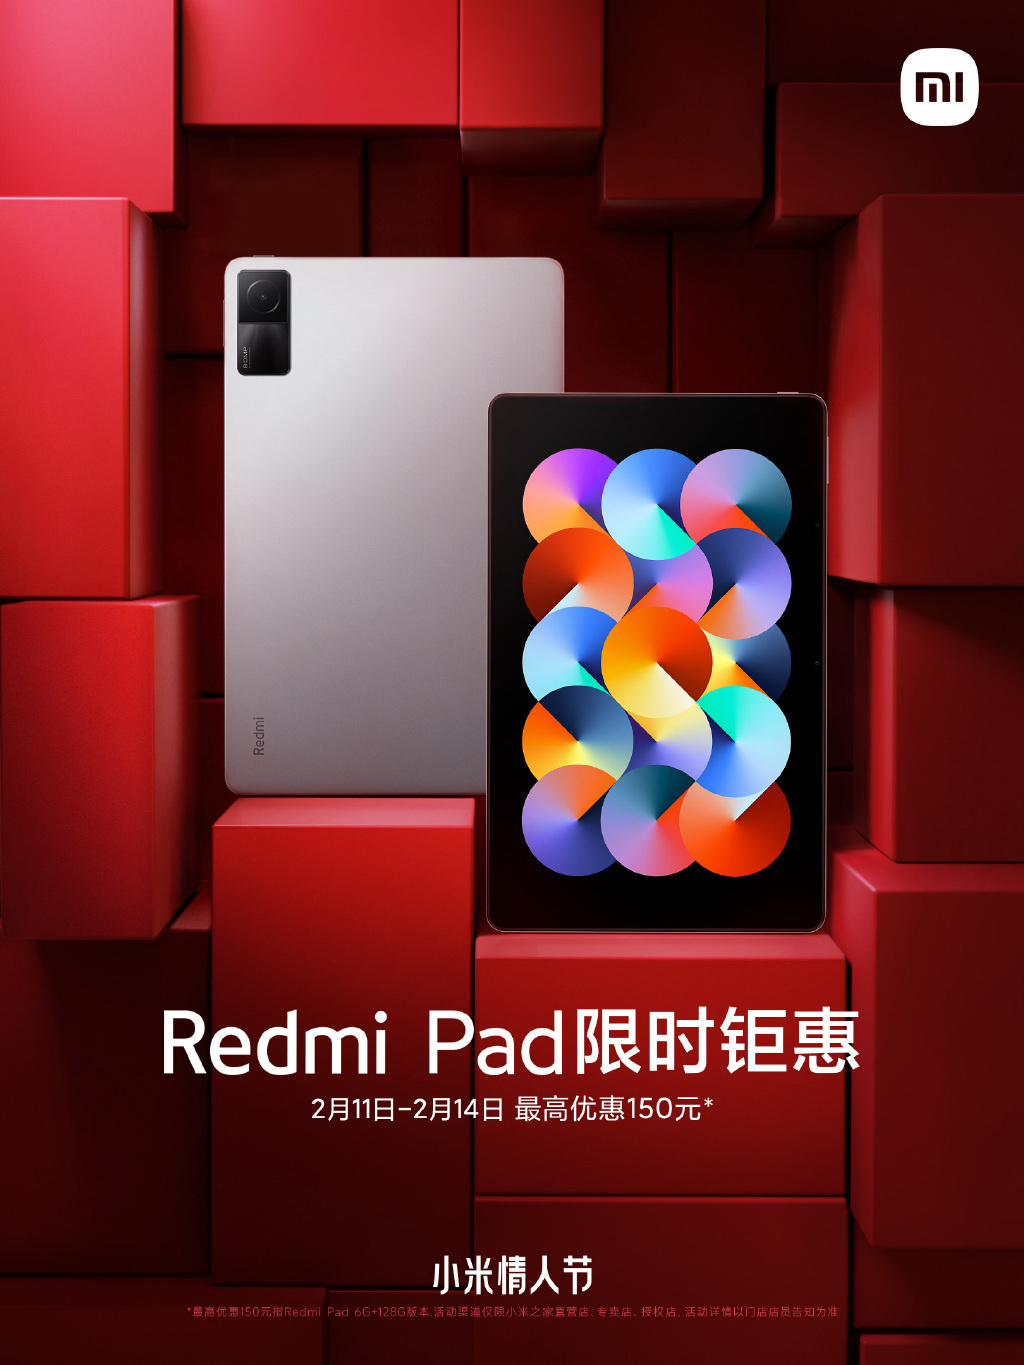 Redmi Note 8 Pro Recovery